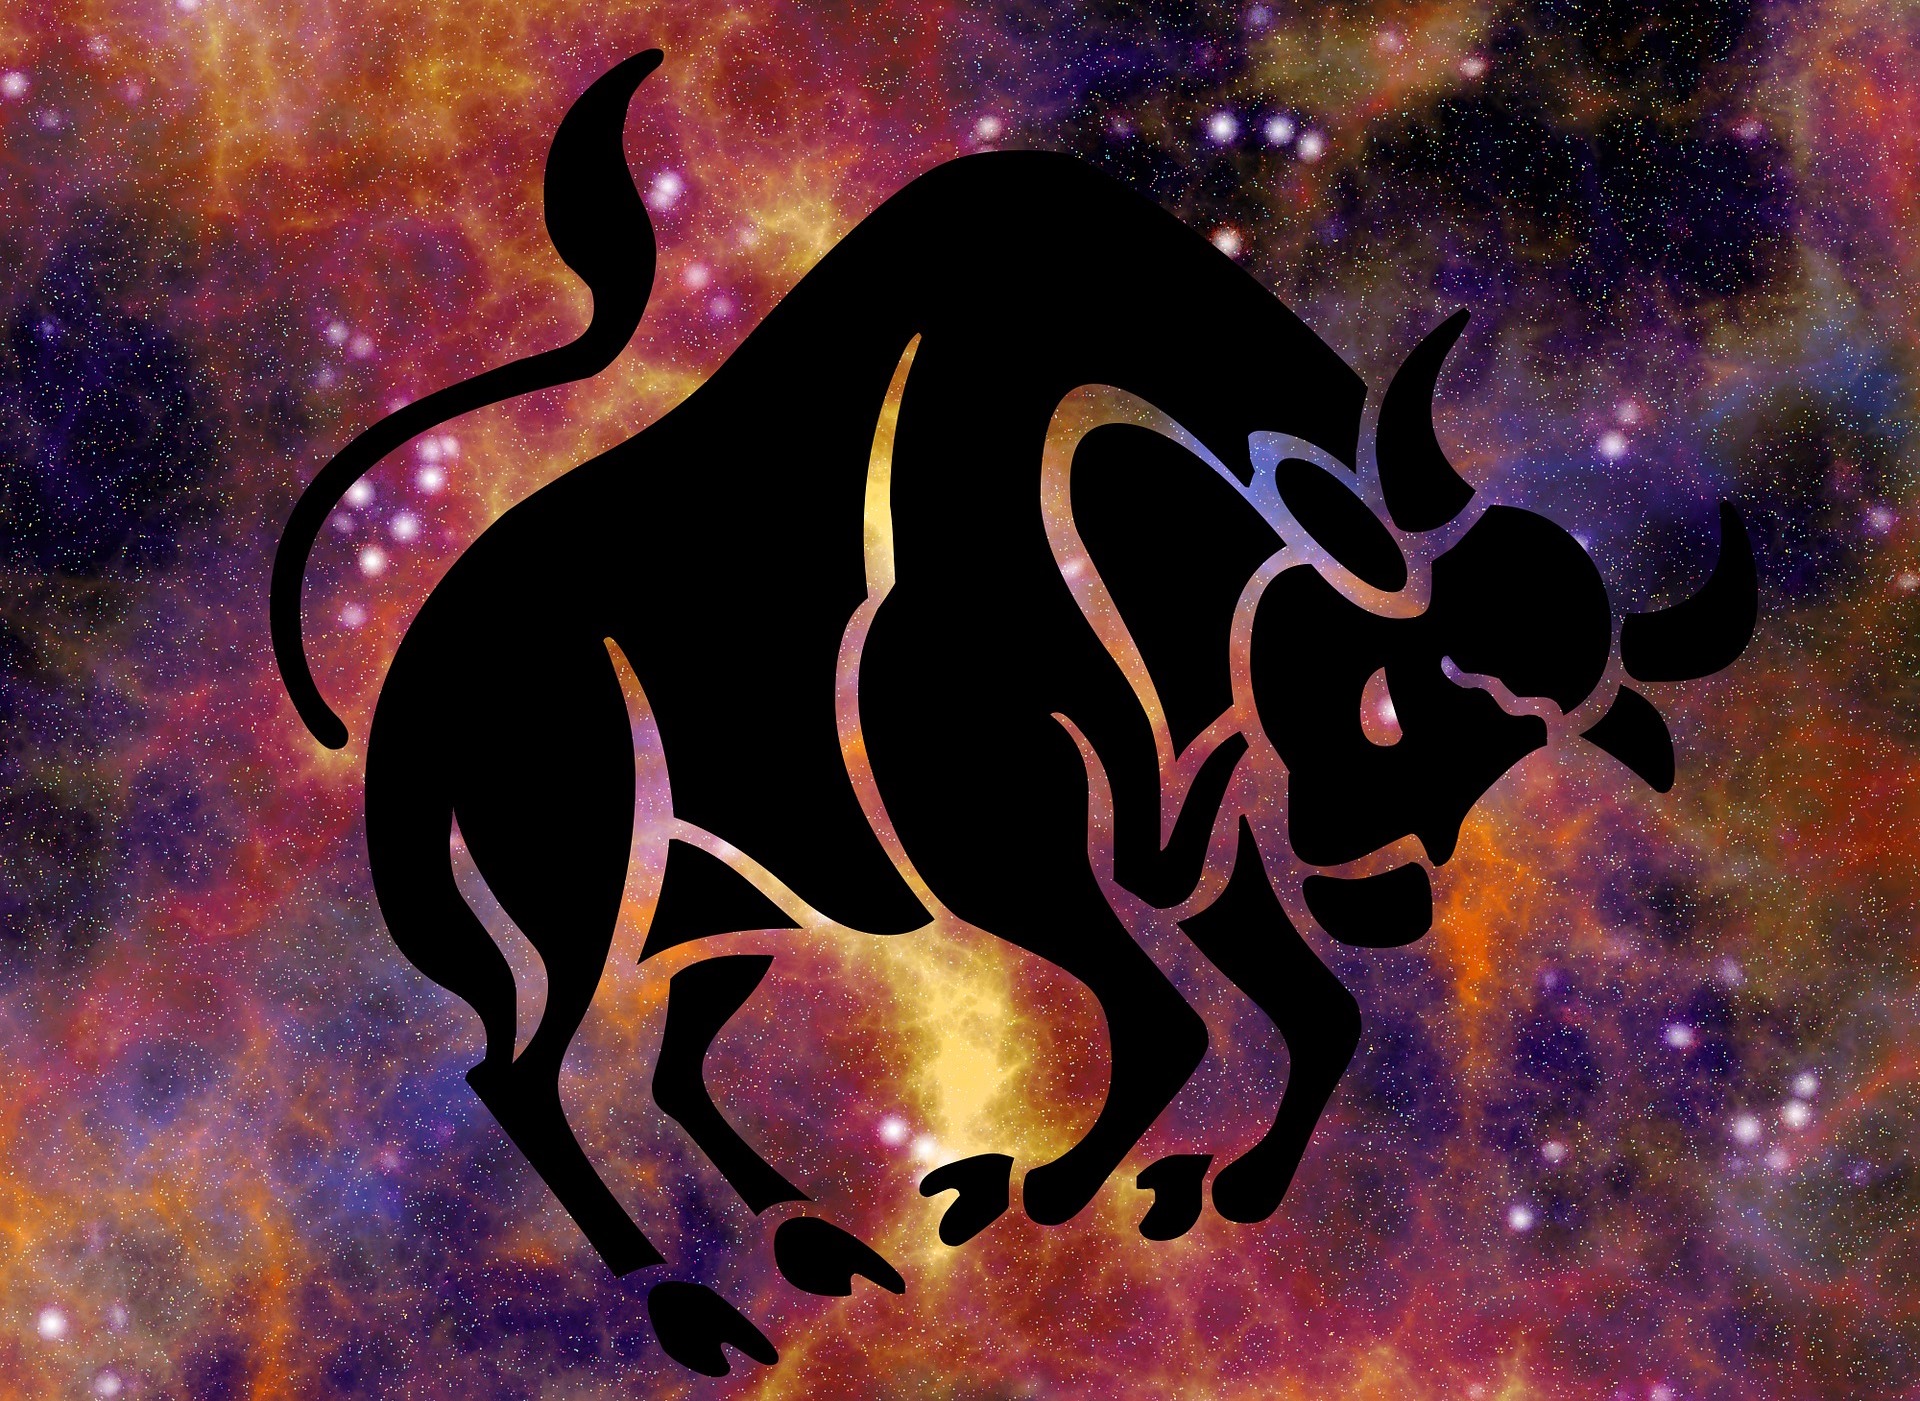  Taurus Zodiac  Signs The Old Farmer s Almanac